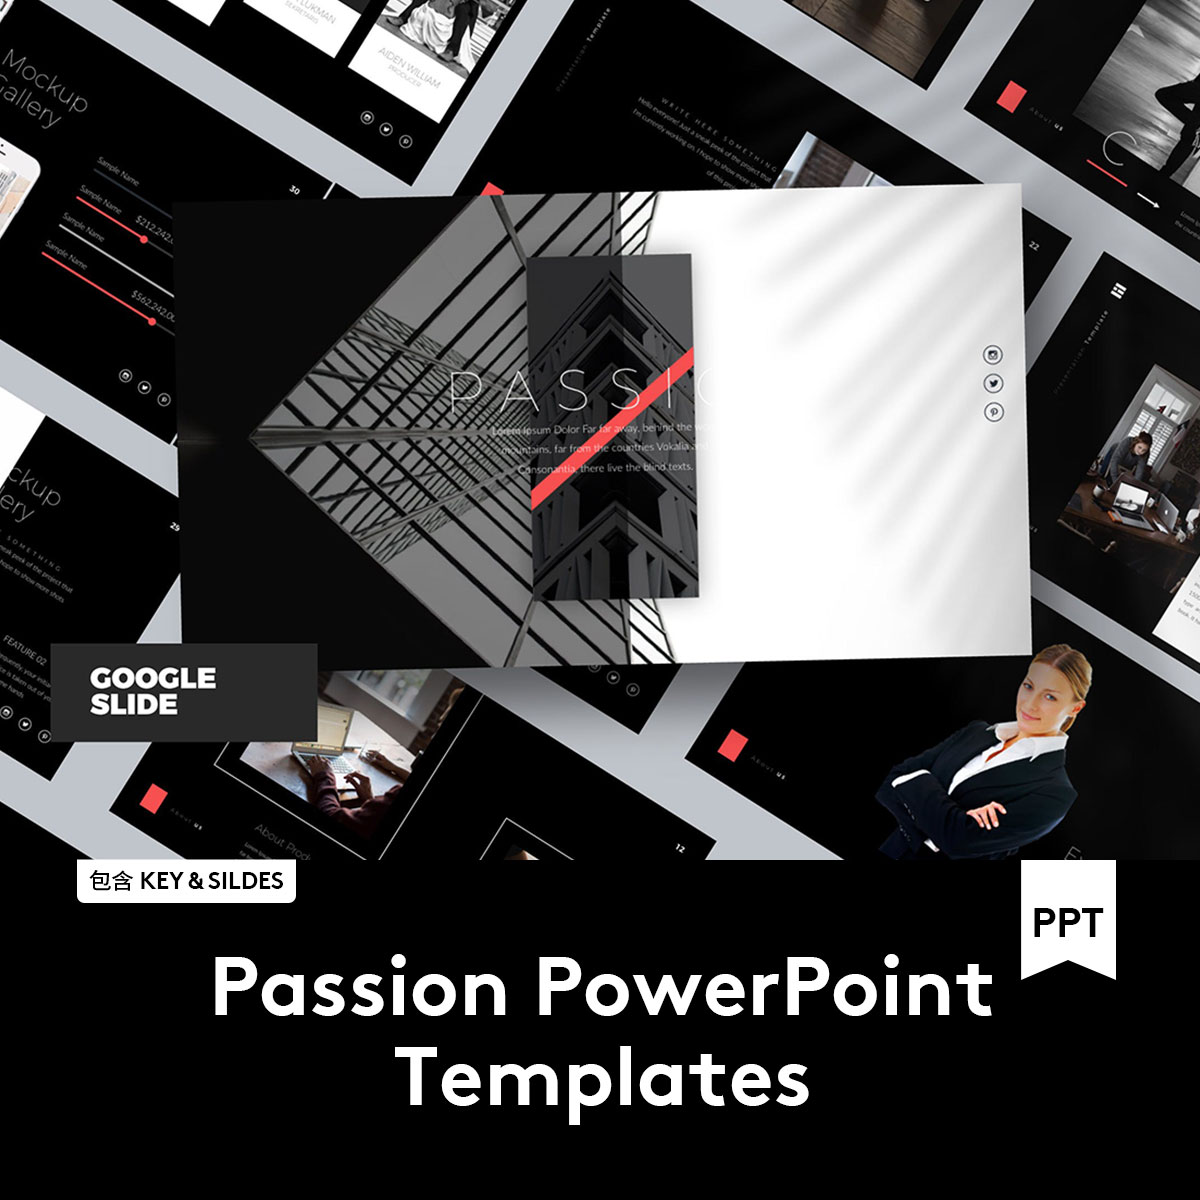 Passion Templates 黑色潮流商业策划PPT幻灯片模板 P2020040202 商务/设计服务 设计素材/源文件 原图主图